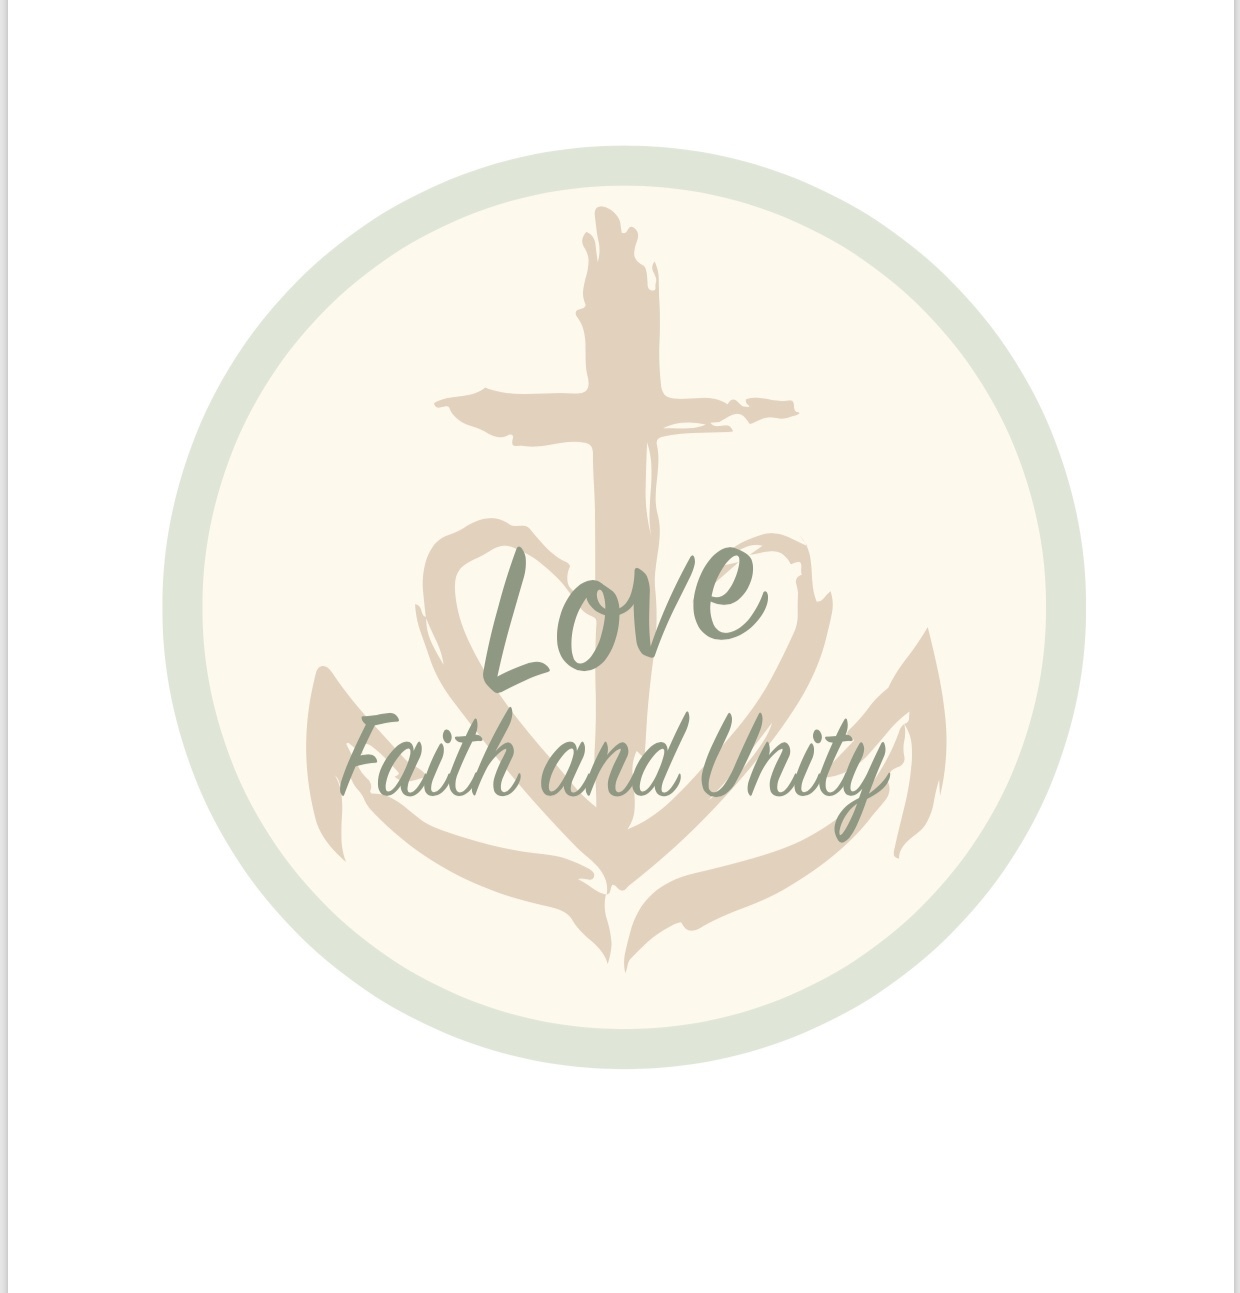 Love Faith and Unity - Medical Marijuana Doctors - Cannabizme.com